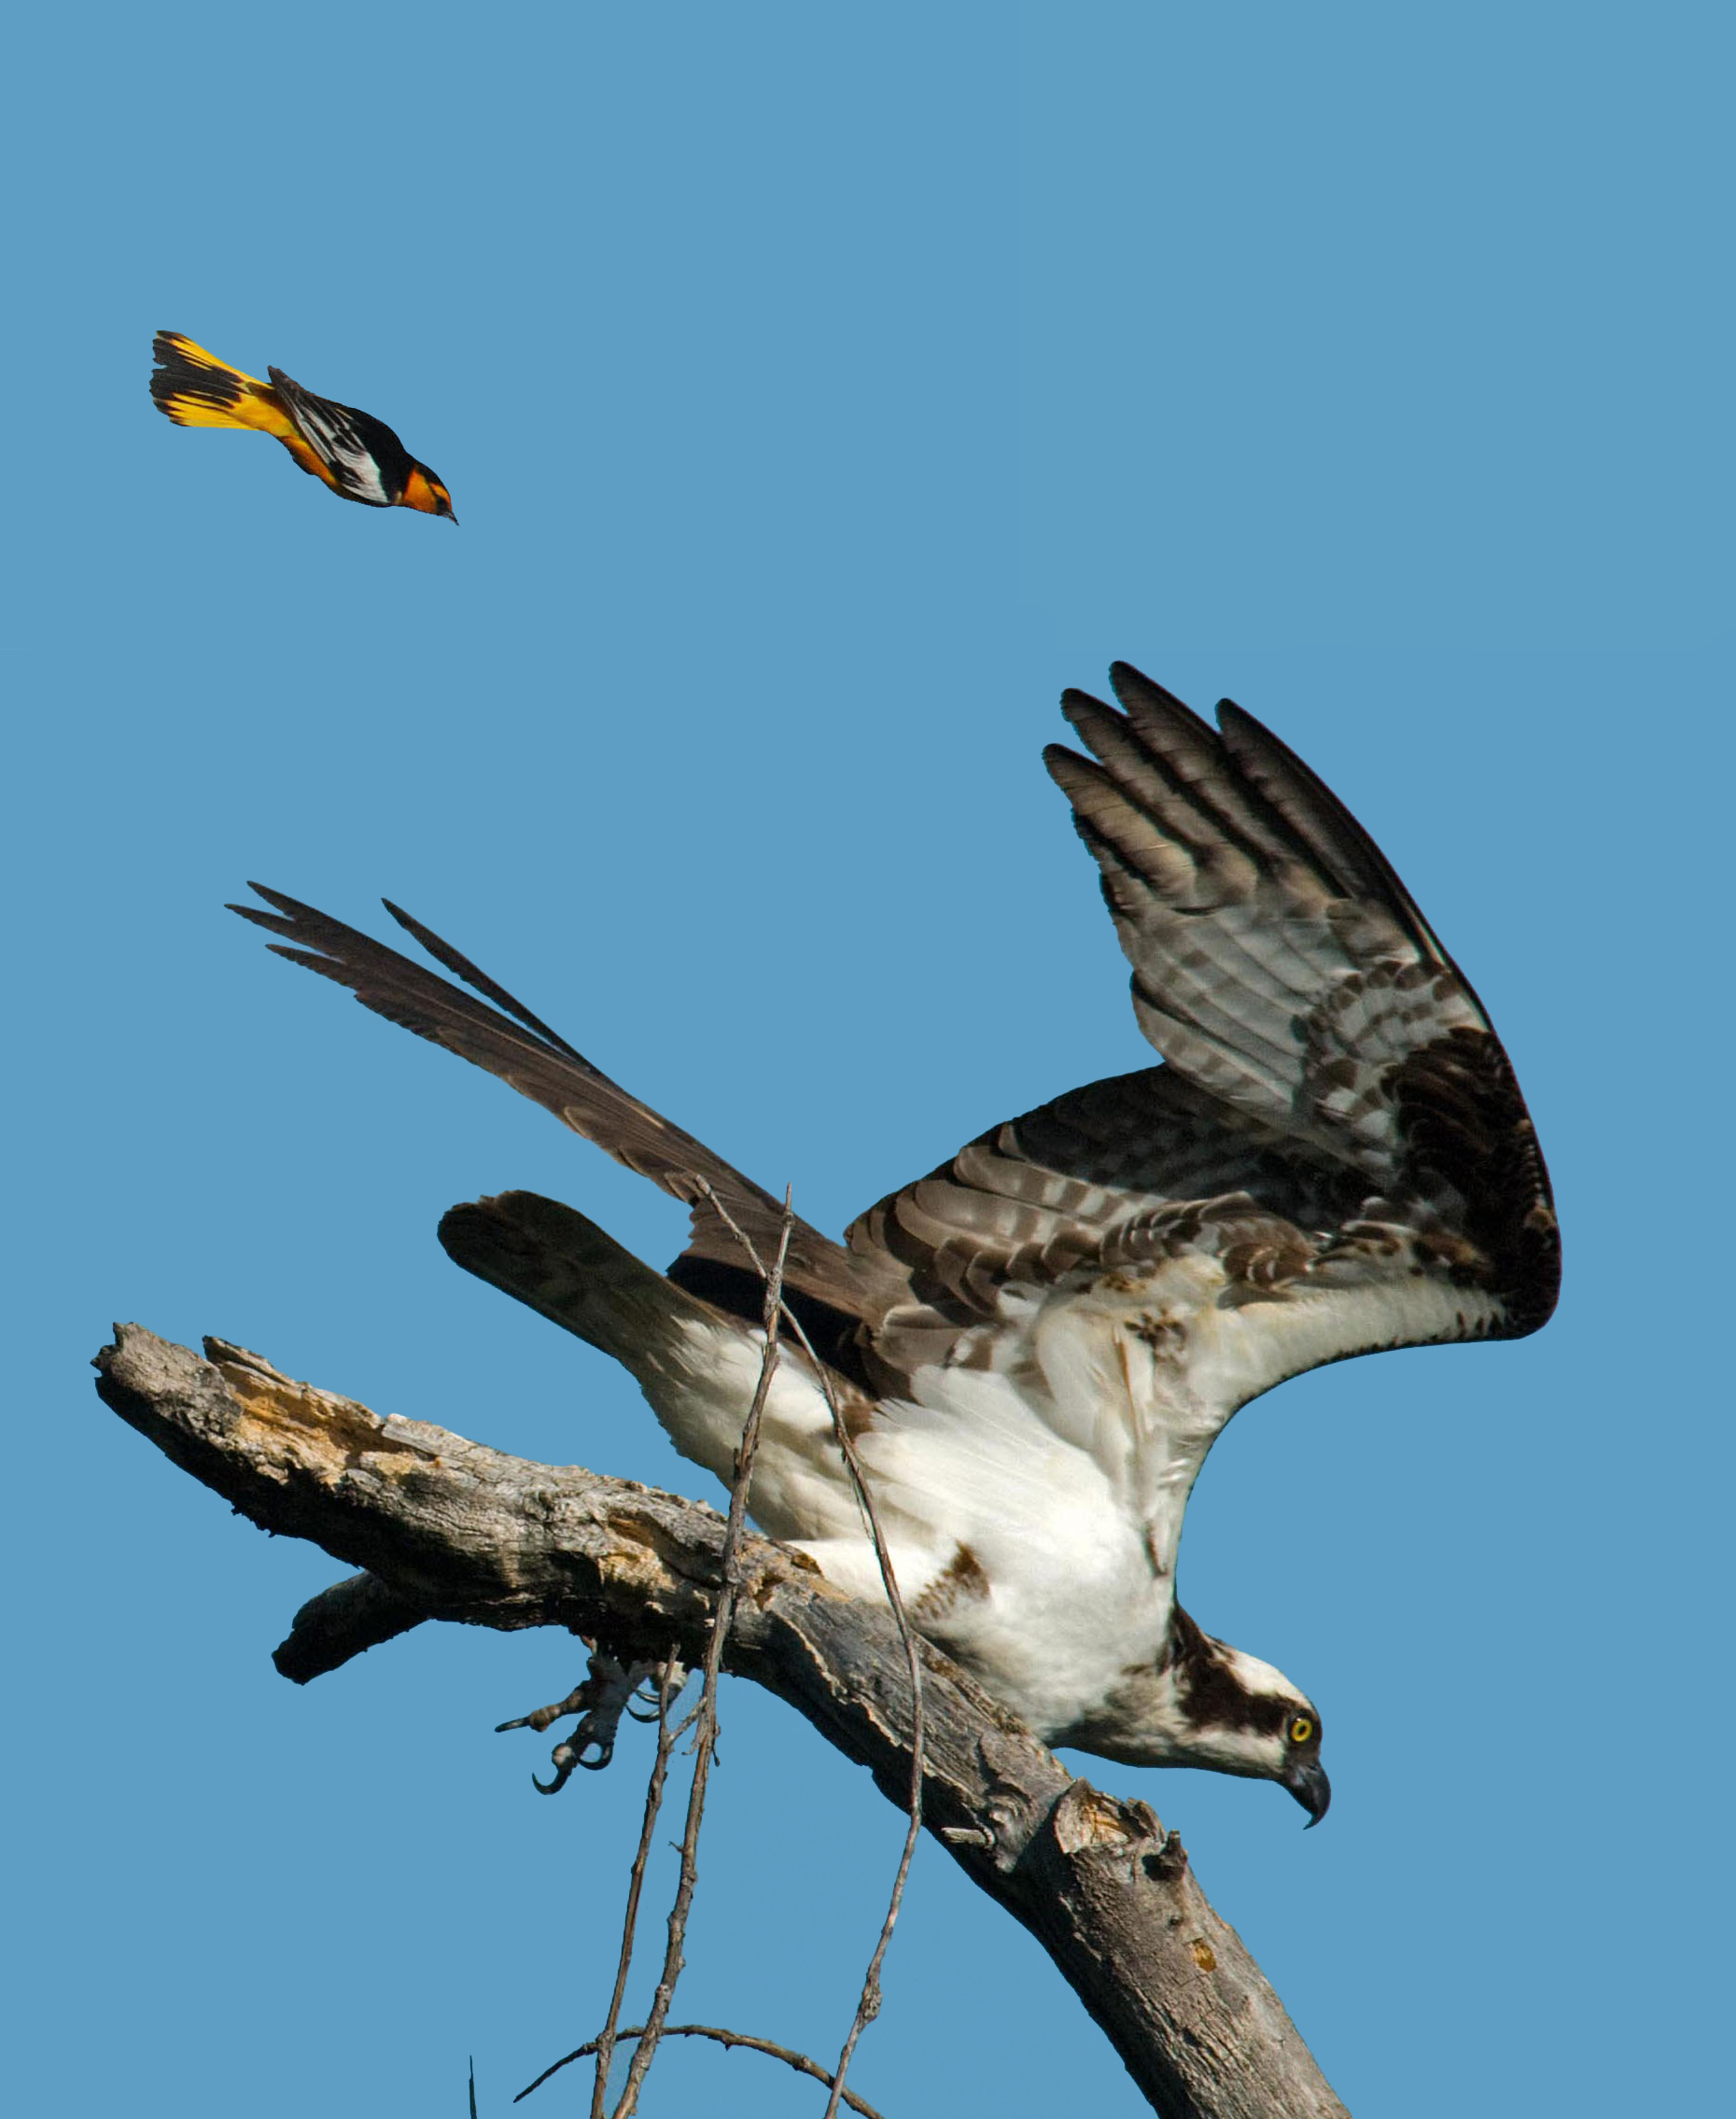 Hooded Oriole chasing Osprey-OSPREY WAS NEAR BIRDS NEST